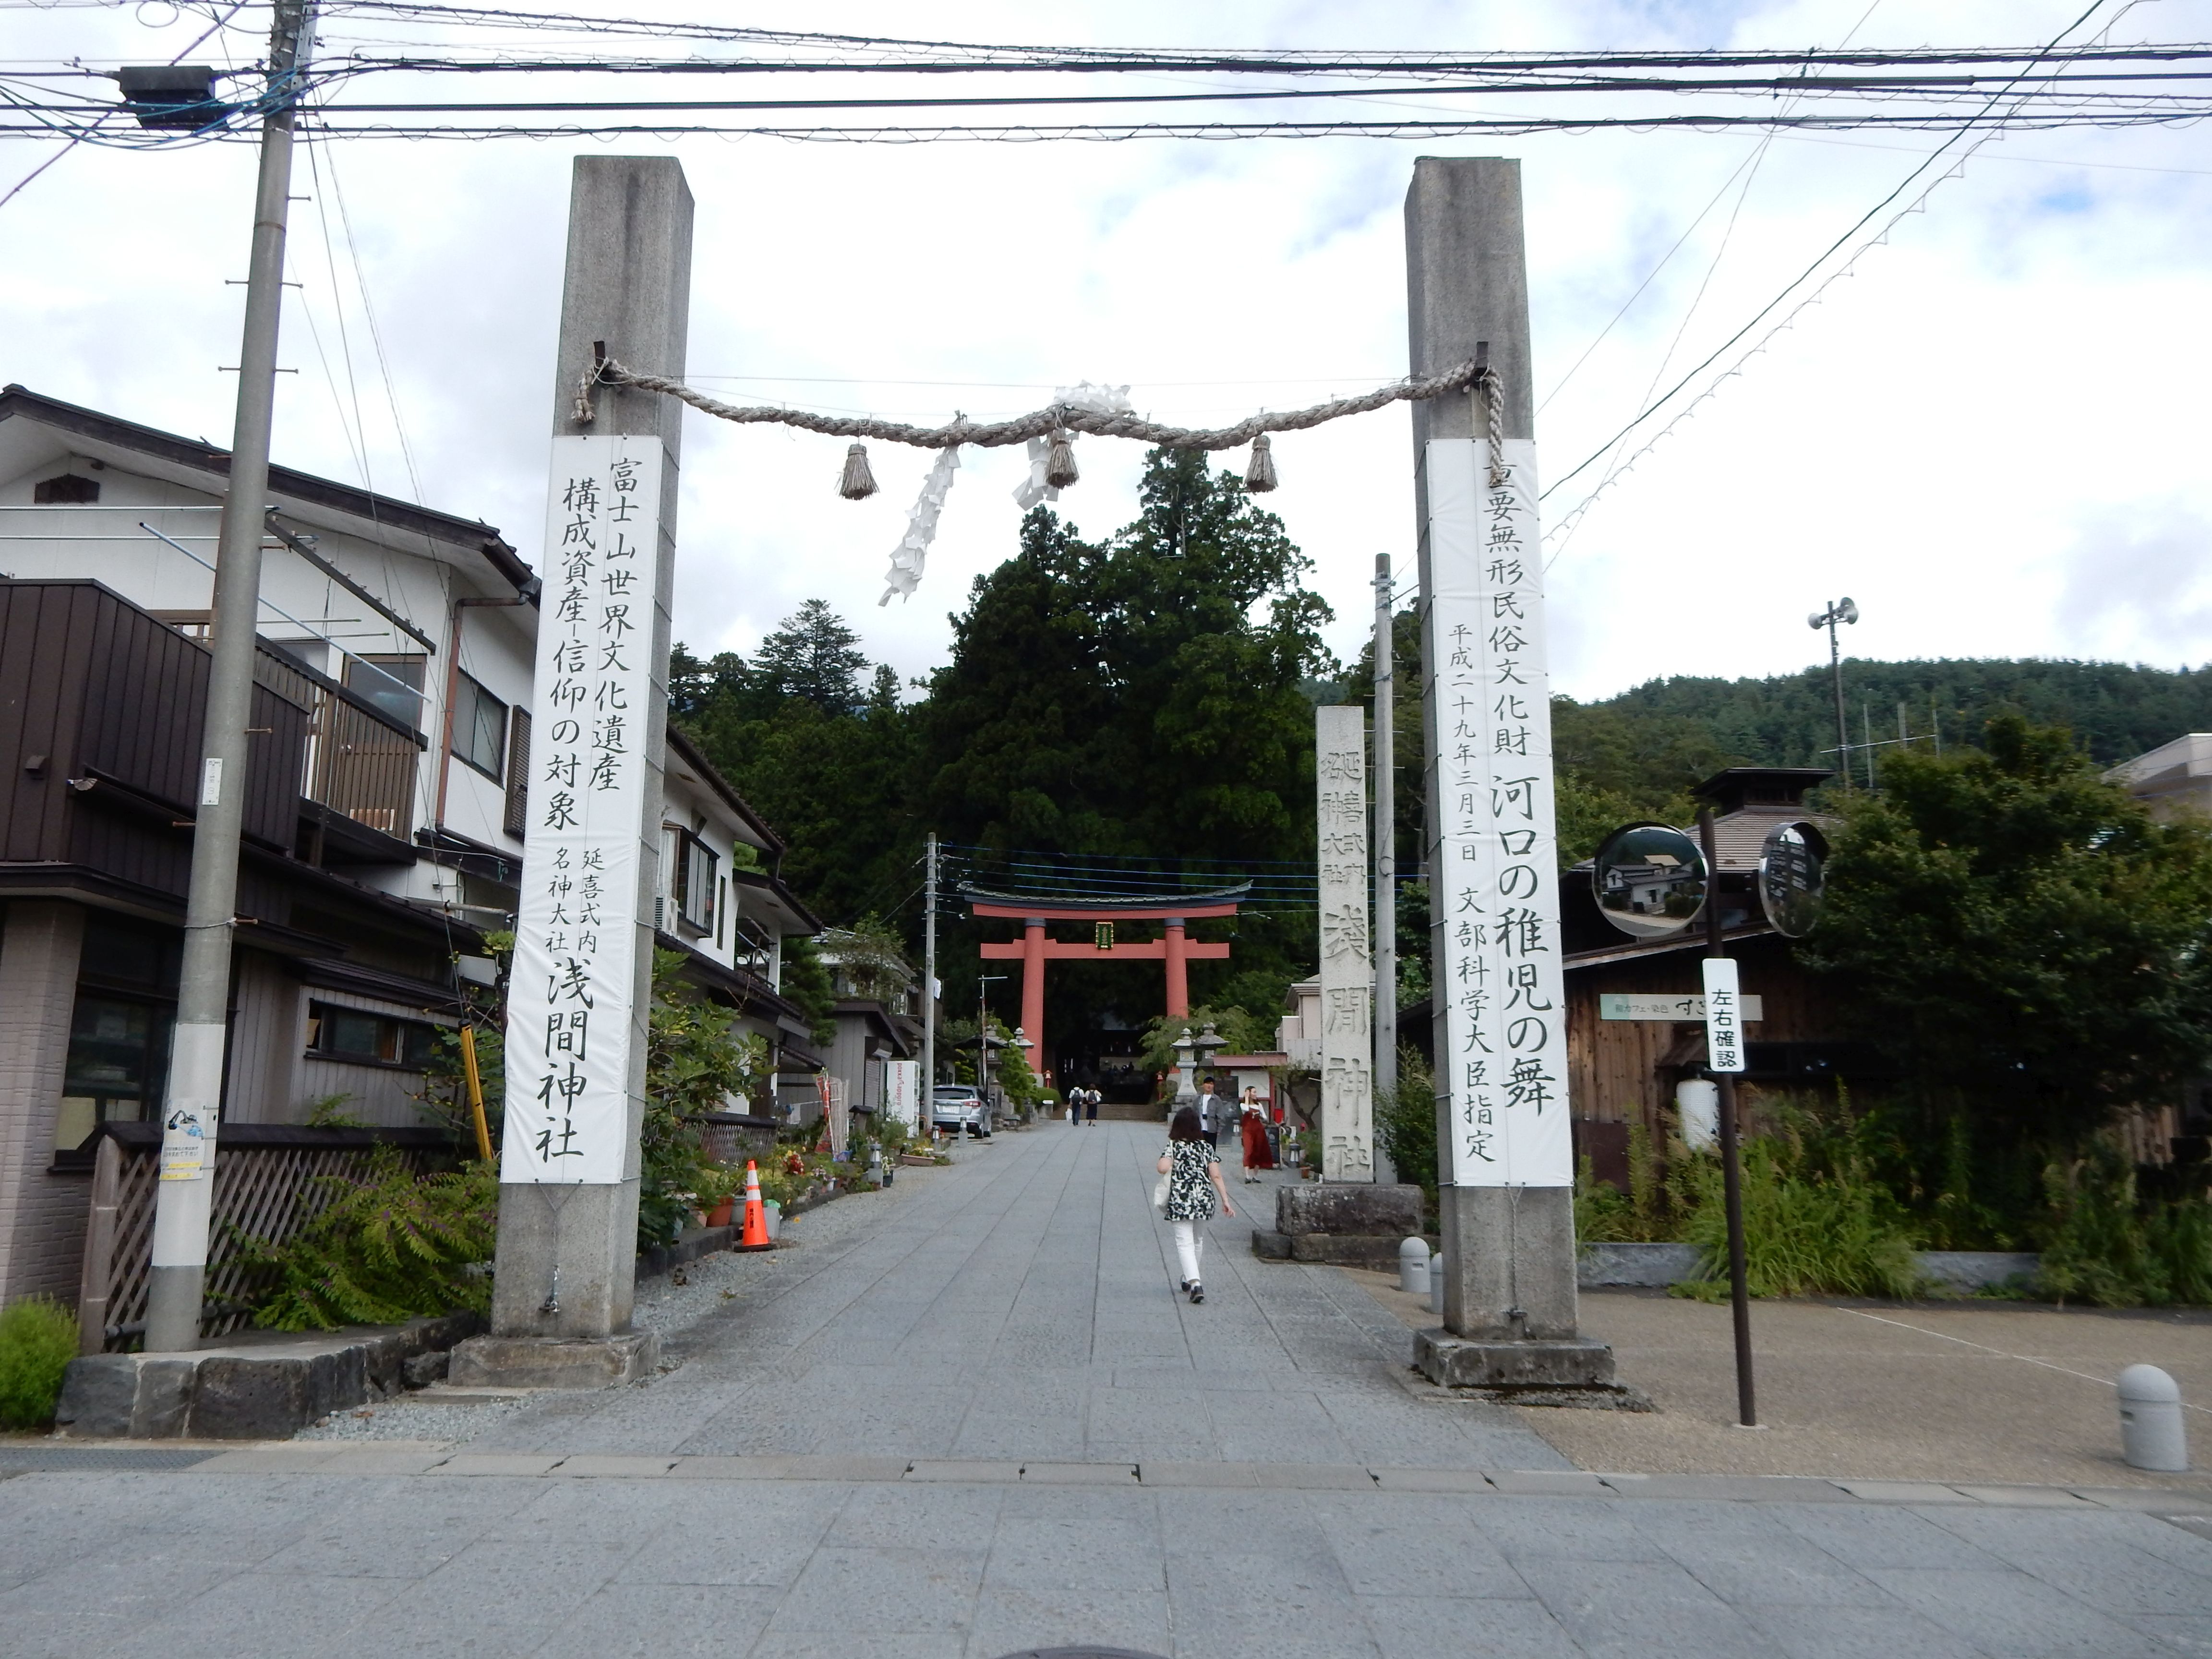 The Asama Shrine